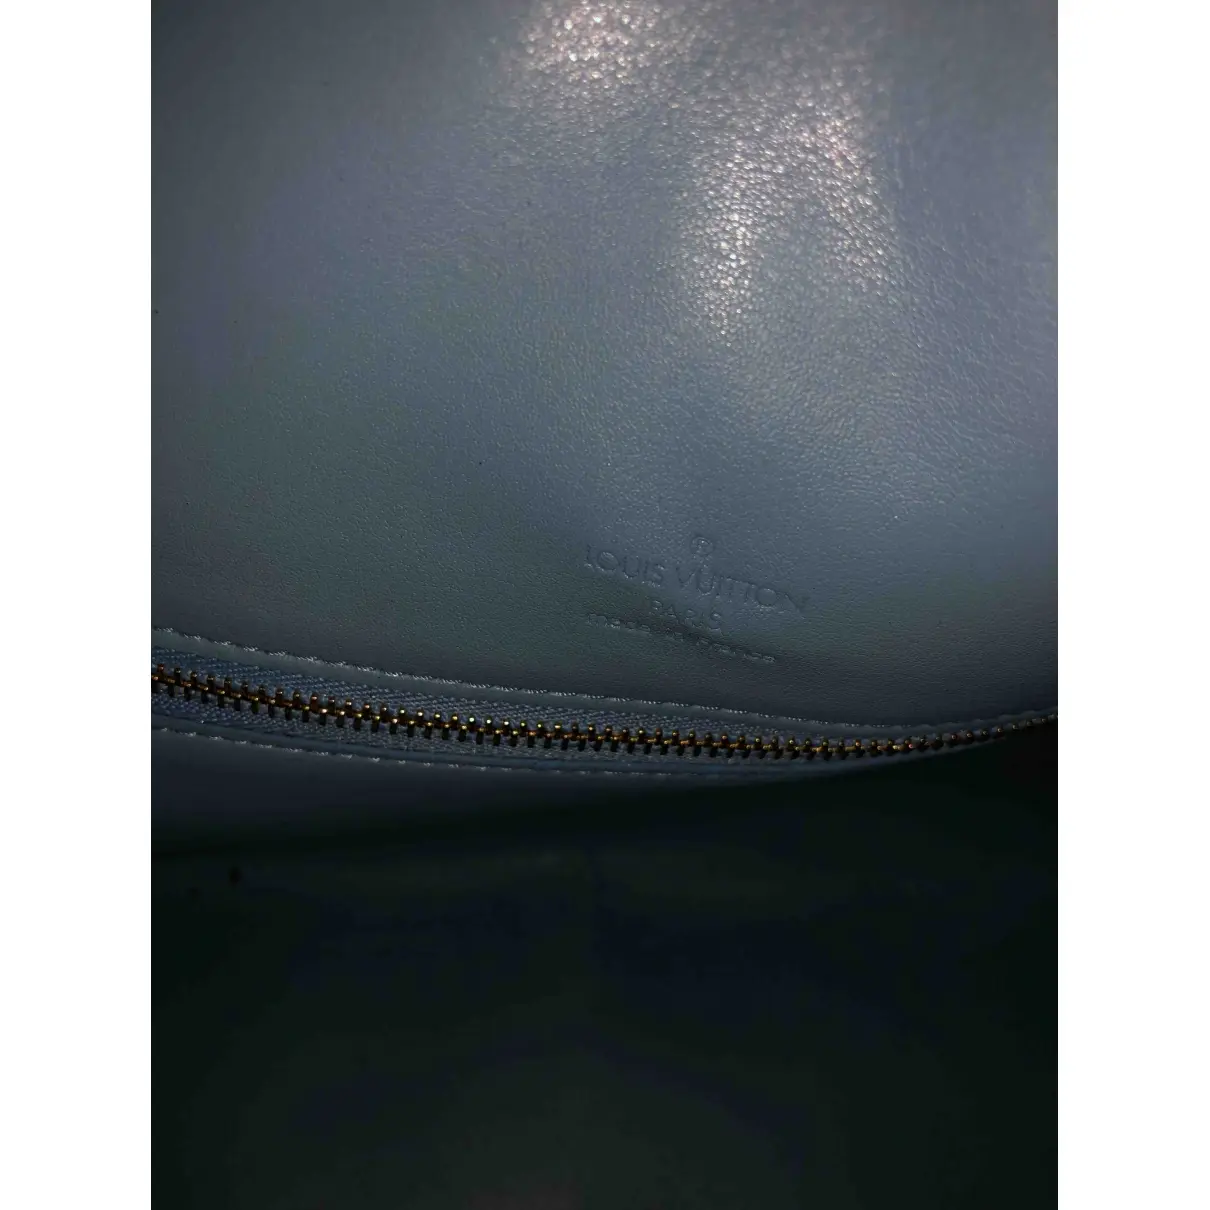 Buy Louis Vuitton Patent leather weekend bag online - Vintage